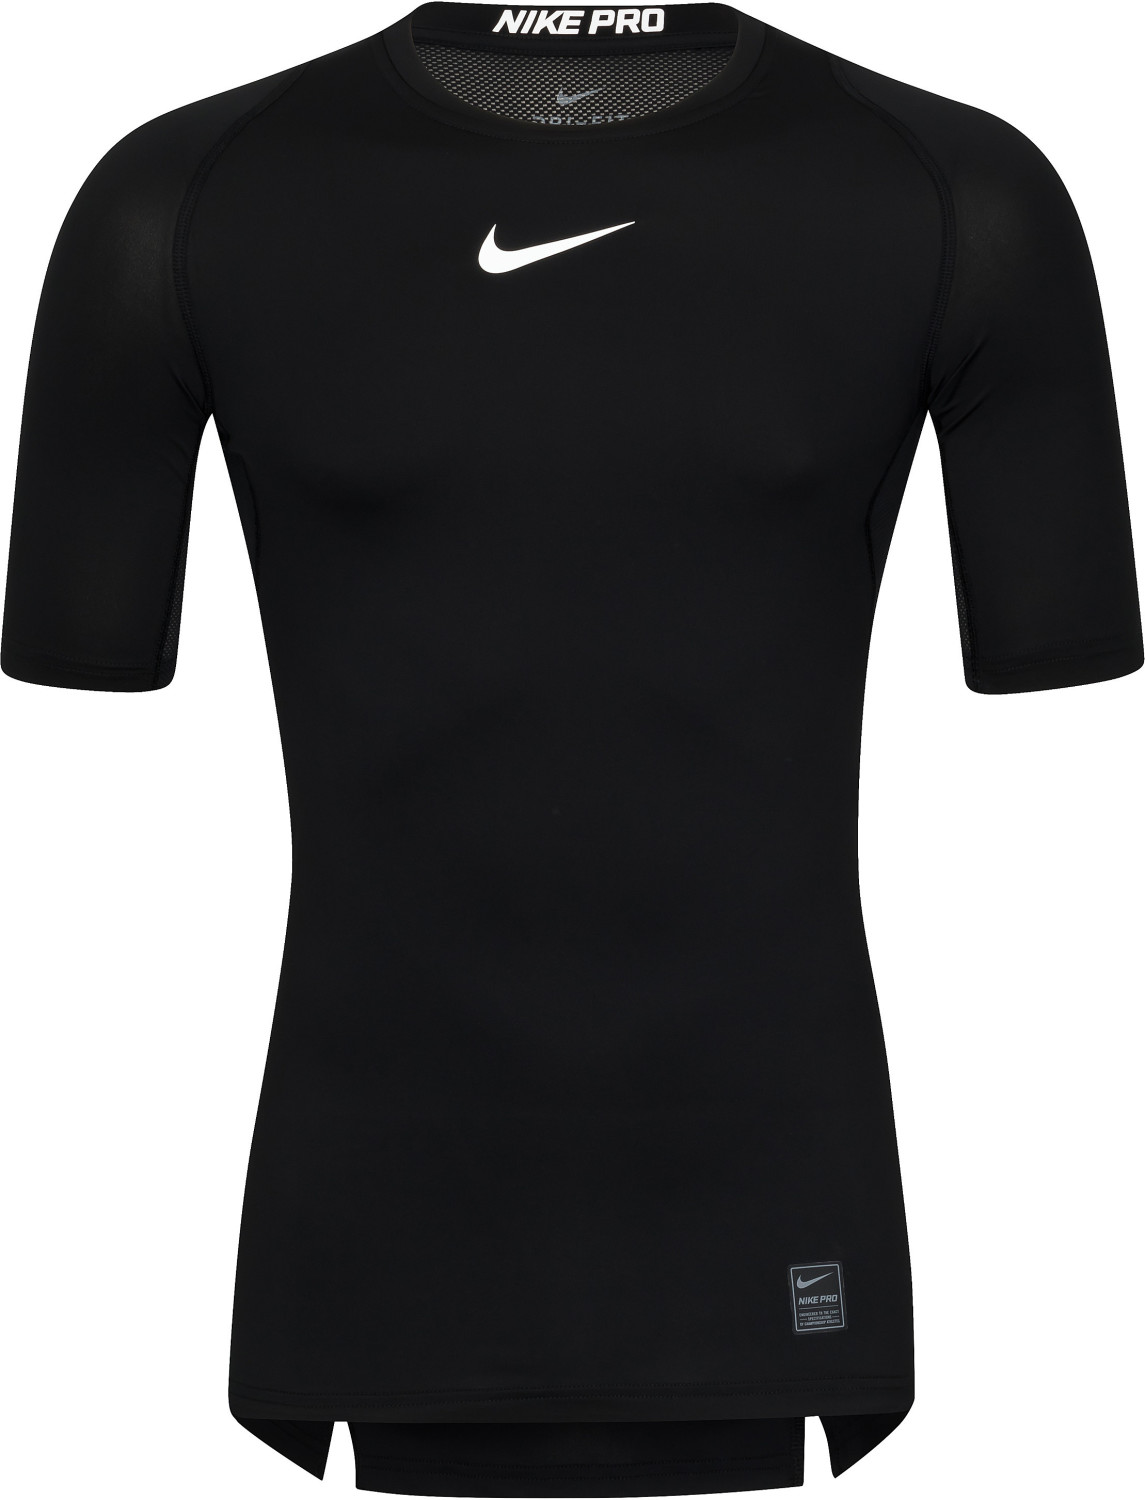 Nike PRO Core Compression Shirt (838091)